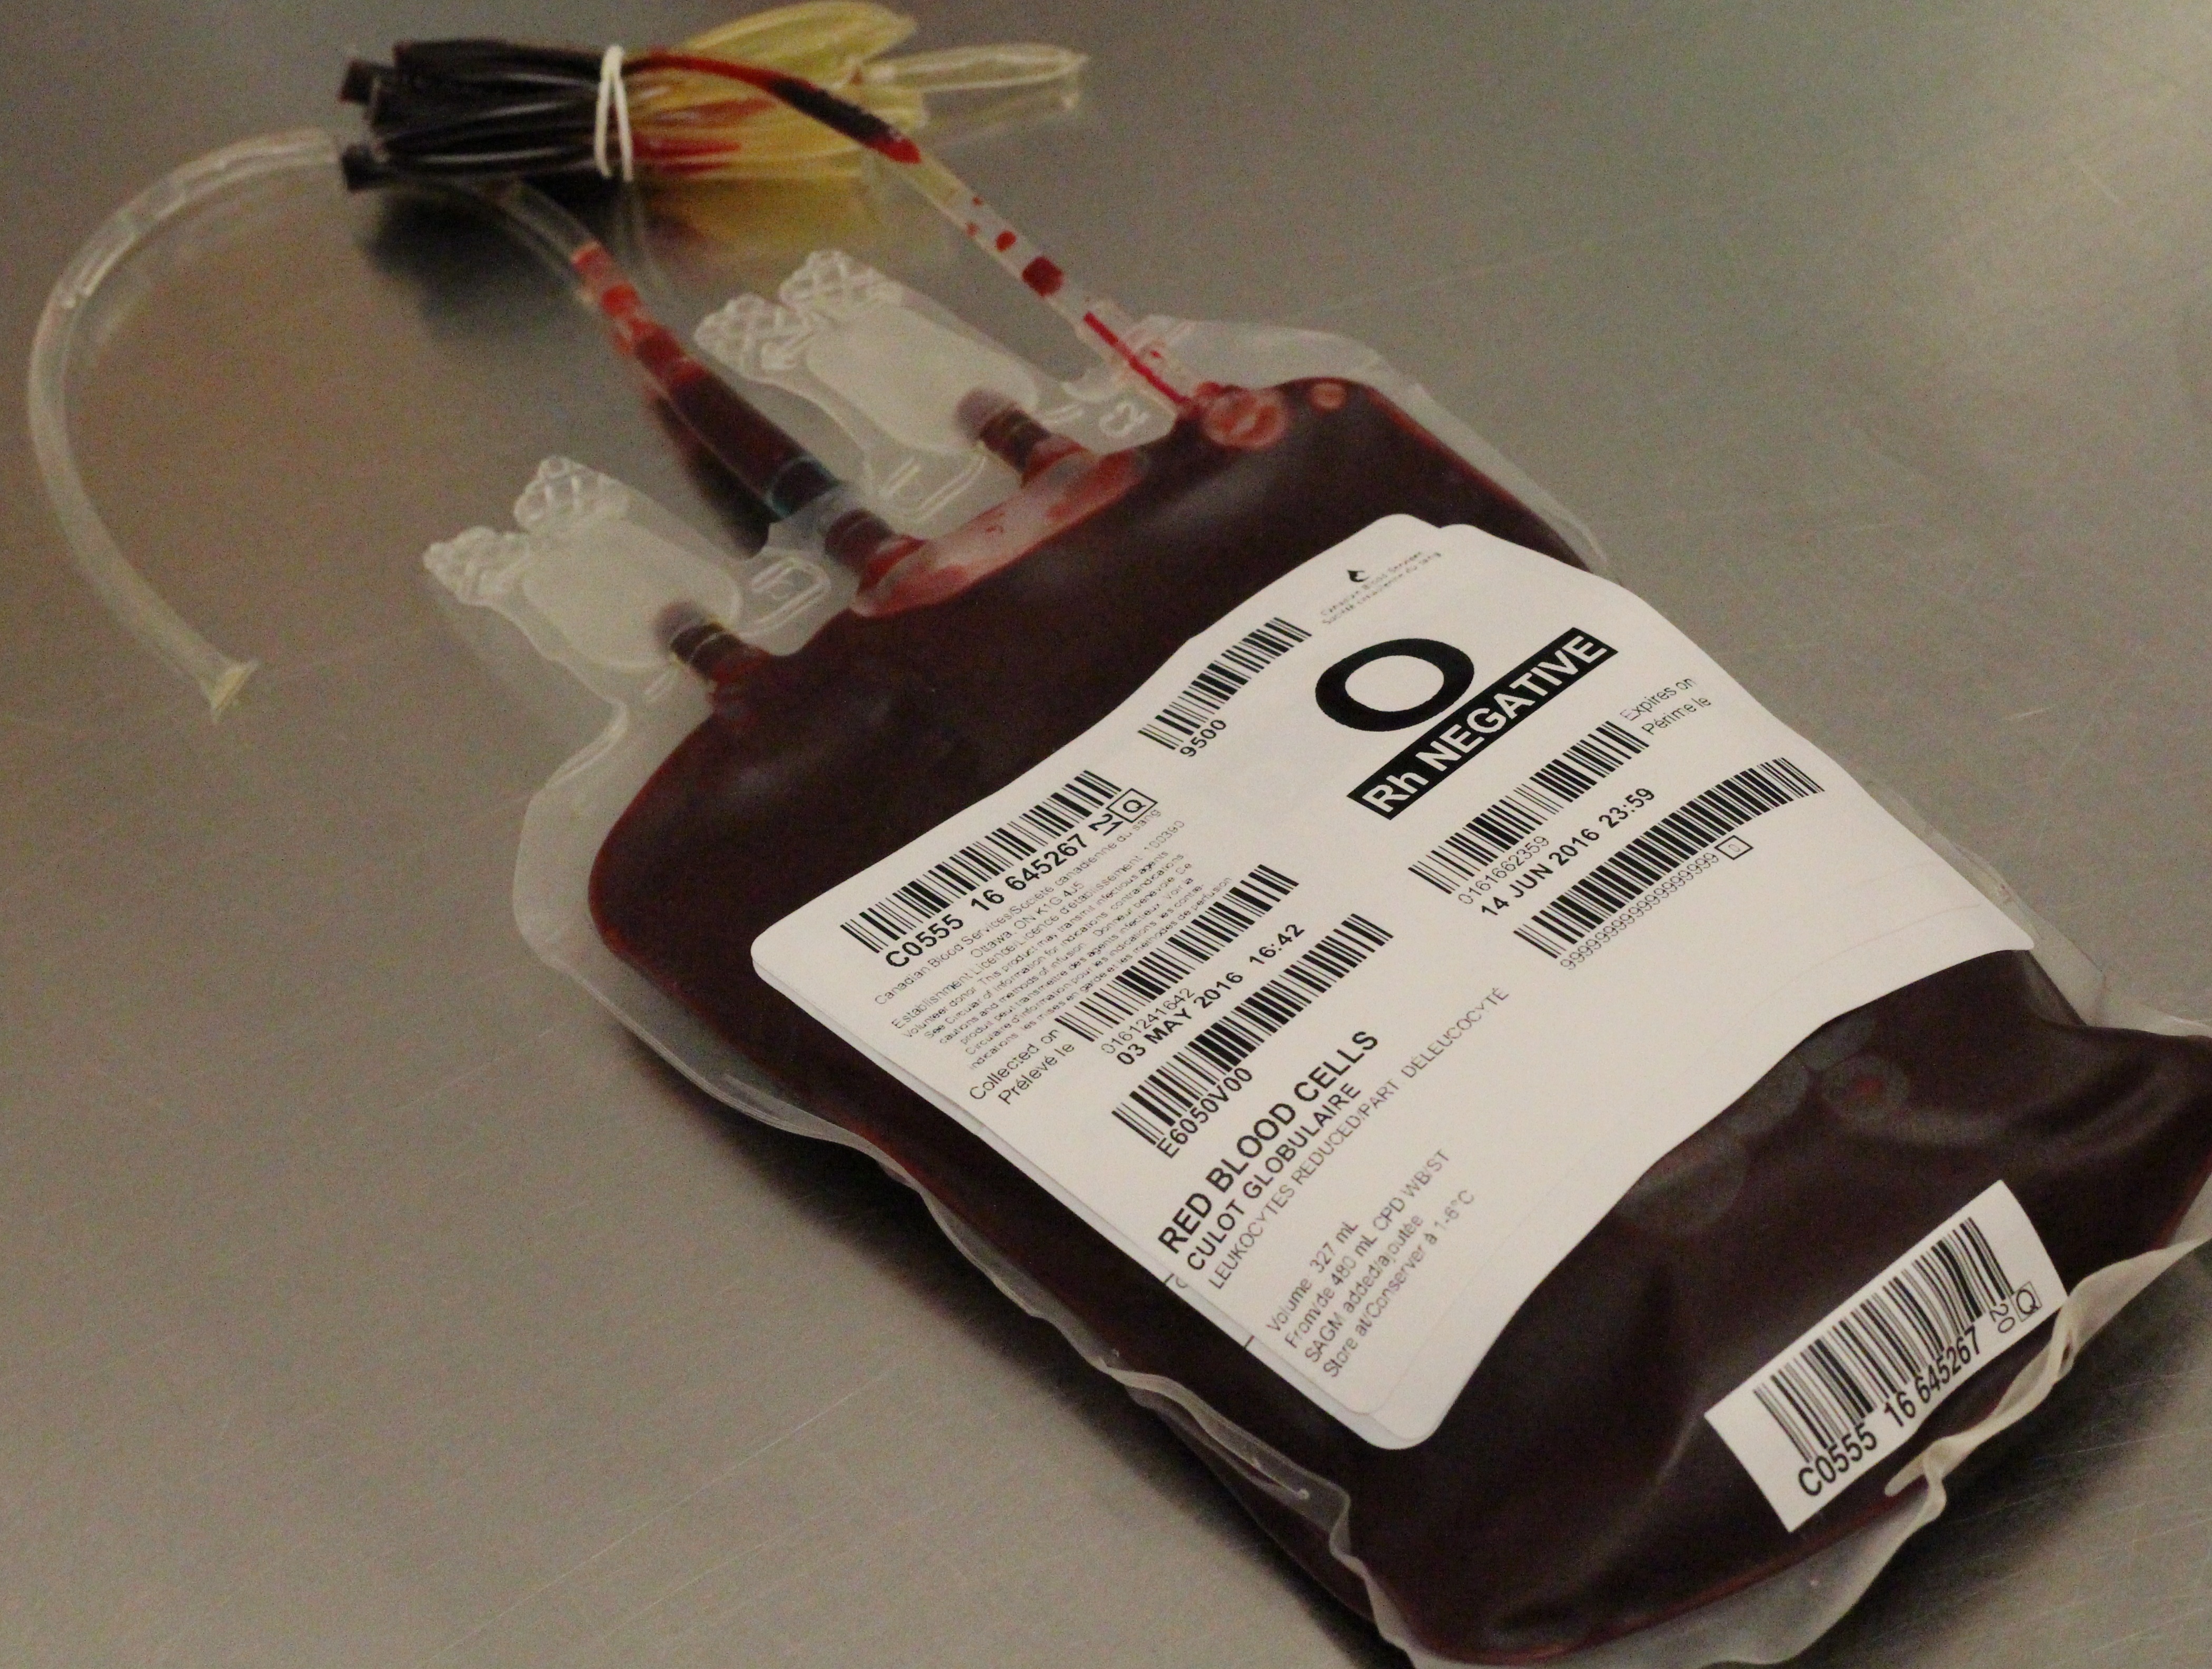 O Rh negative red blood cells unit